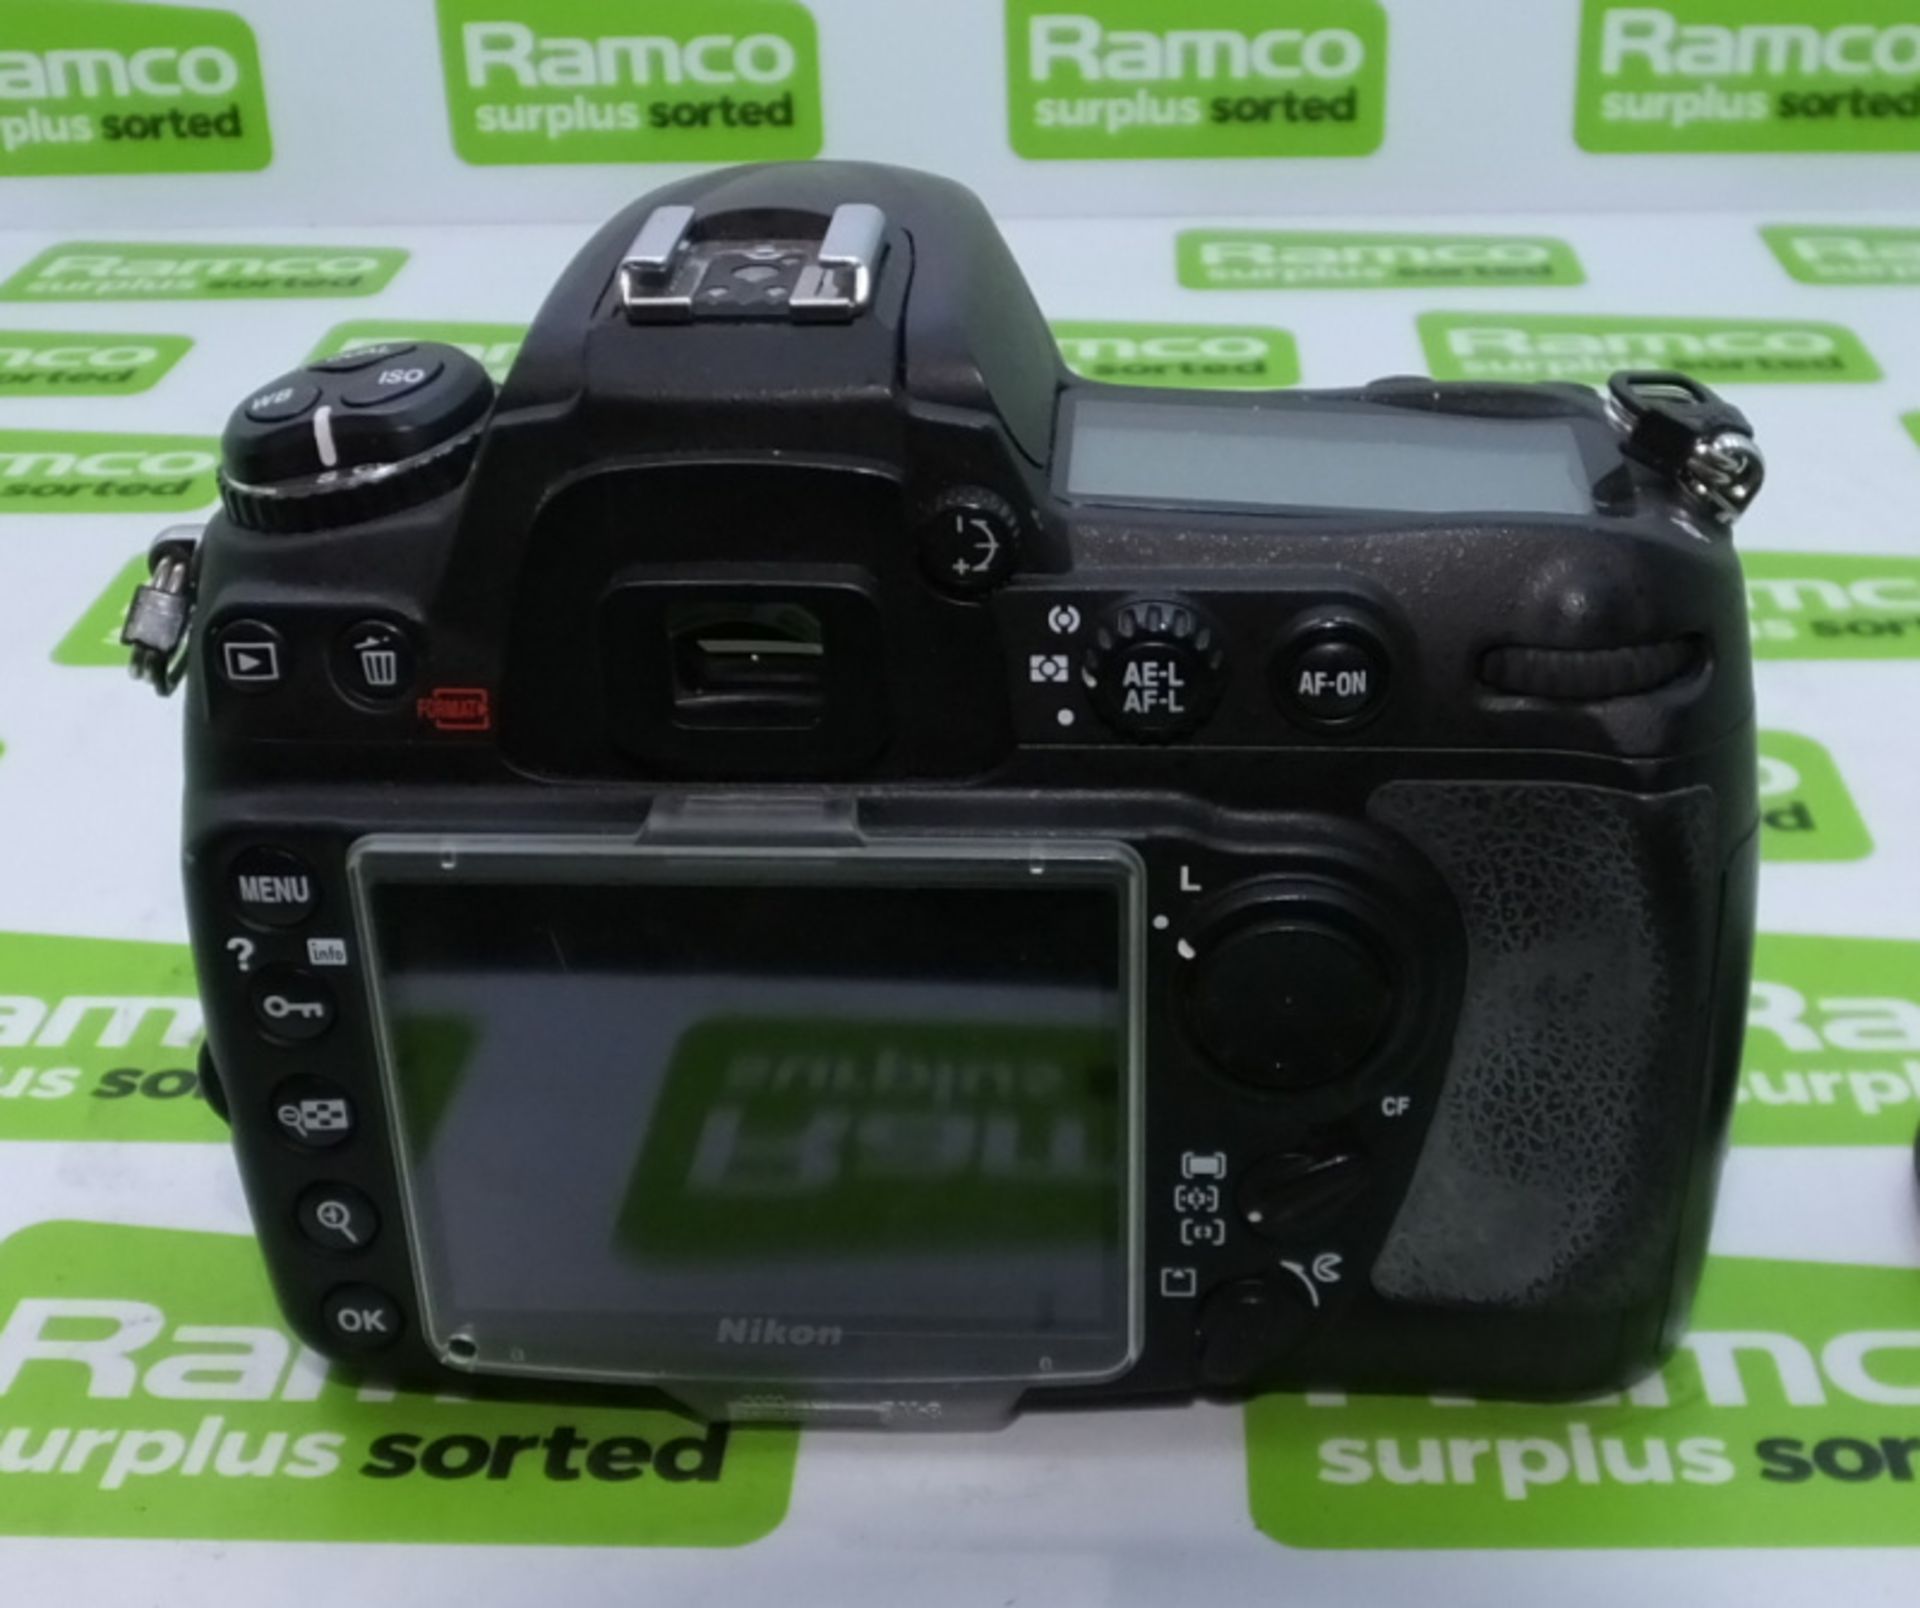 Nikon D300 SLR Digital Camera Body - Image 2 of 3